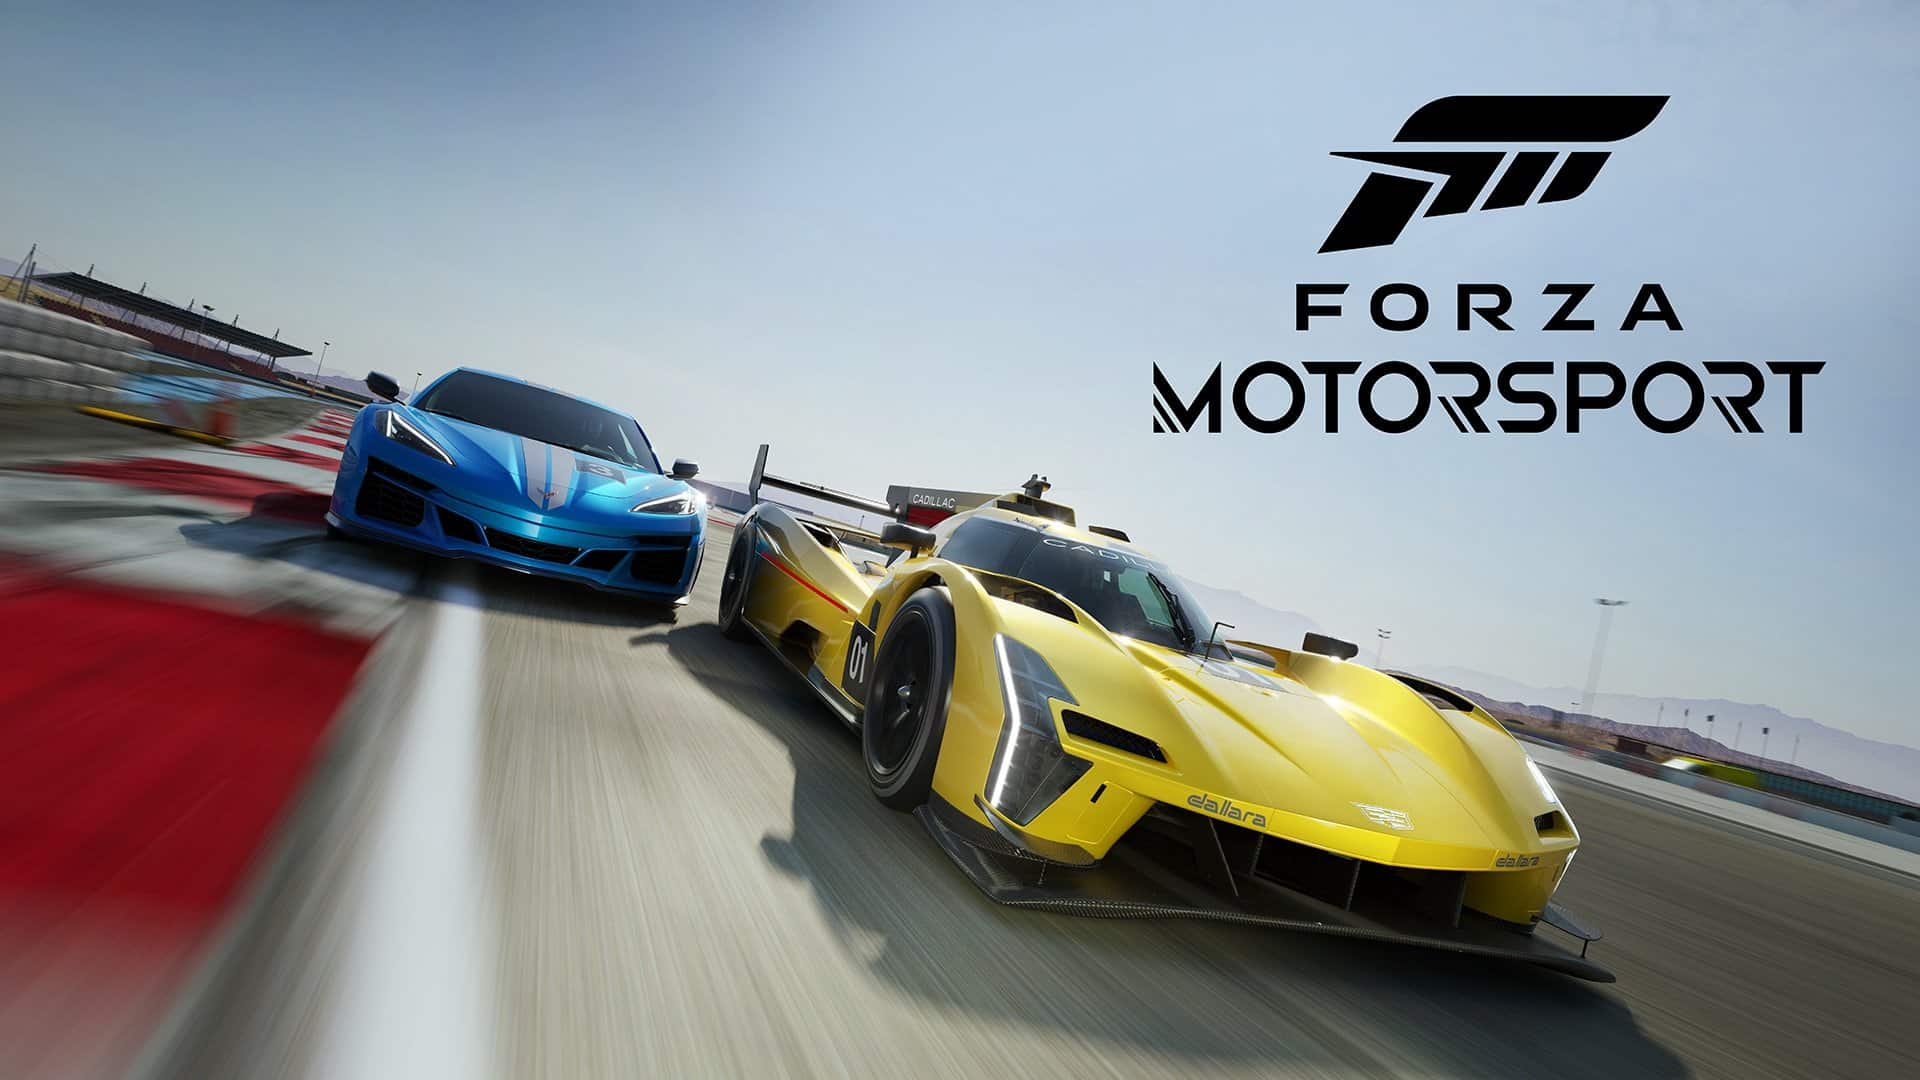 4《Forza-Motorsport》在發表會中分享將有超過-500-種車款及-20-個賽道供玩家競速